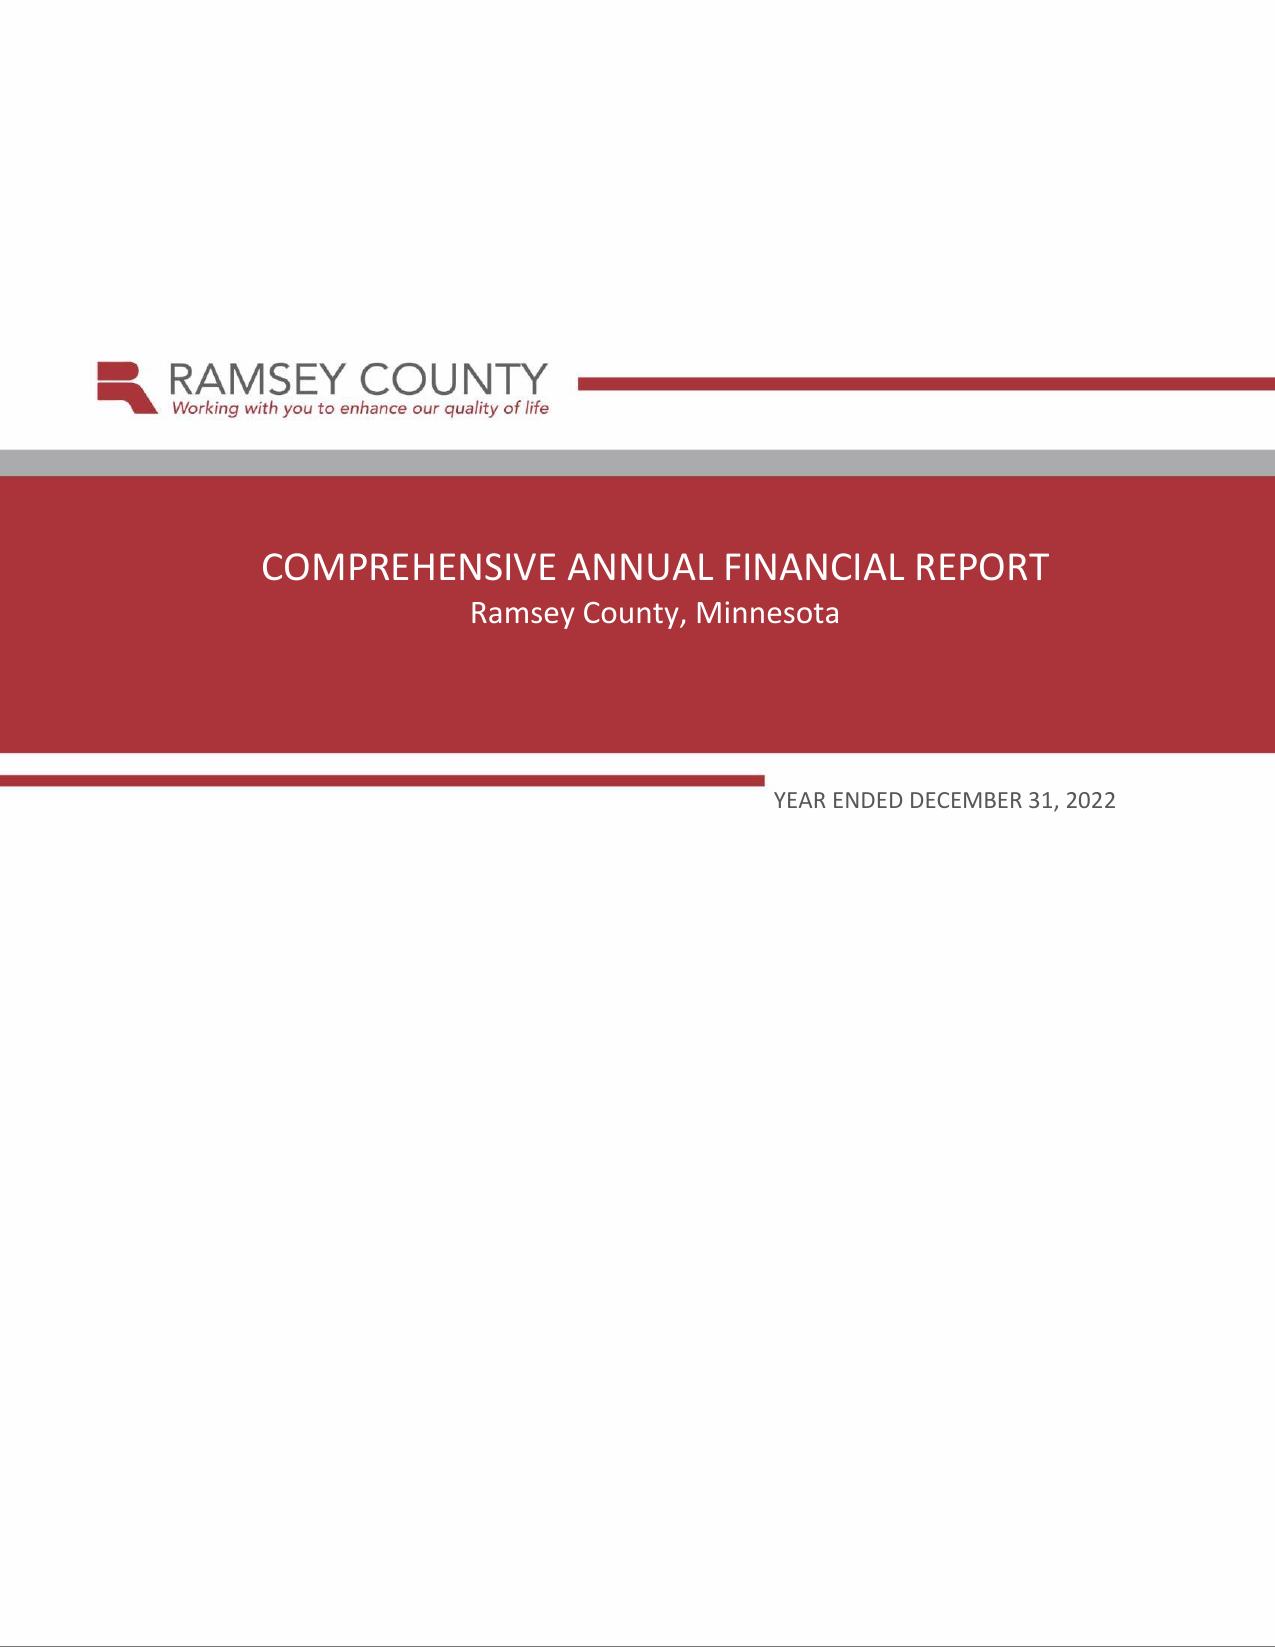 RAMSEYCOUNTY 2022 Annual Report